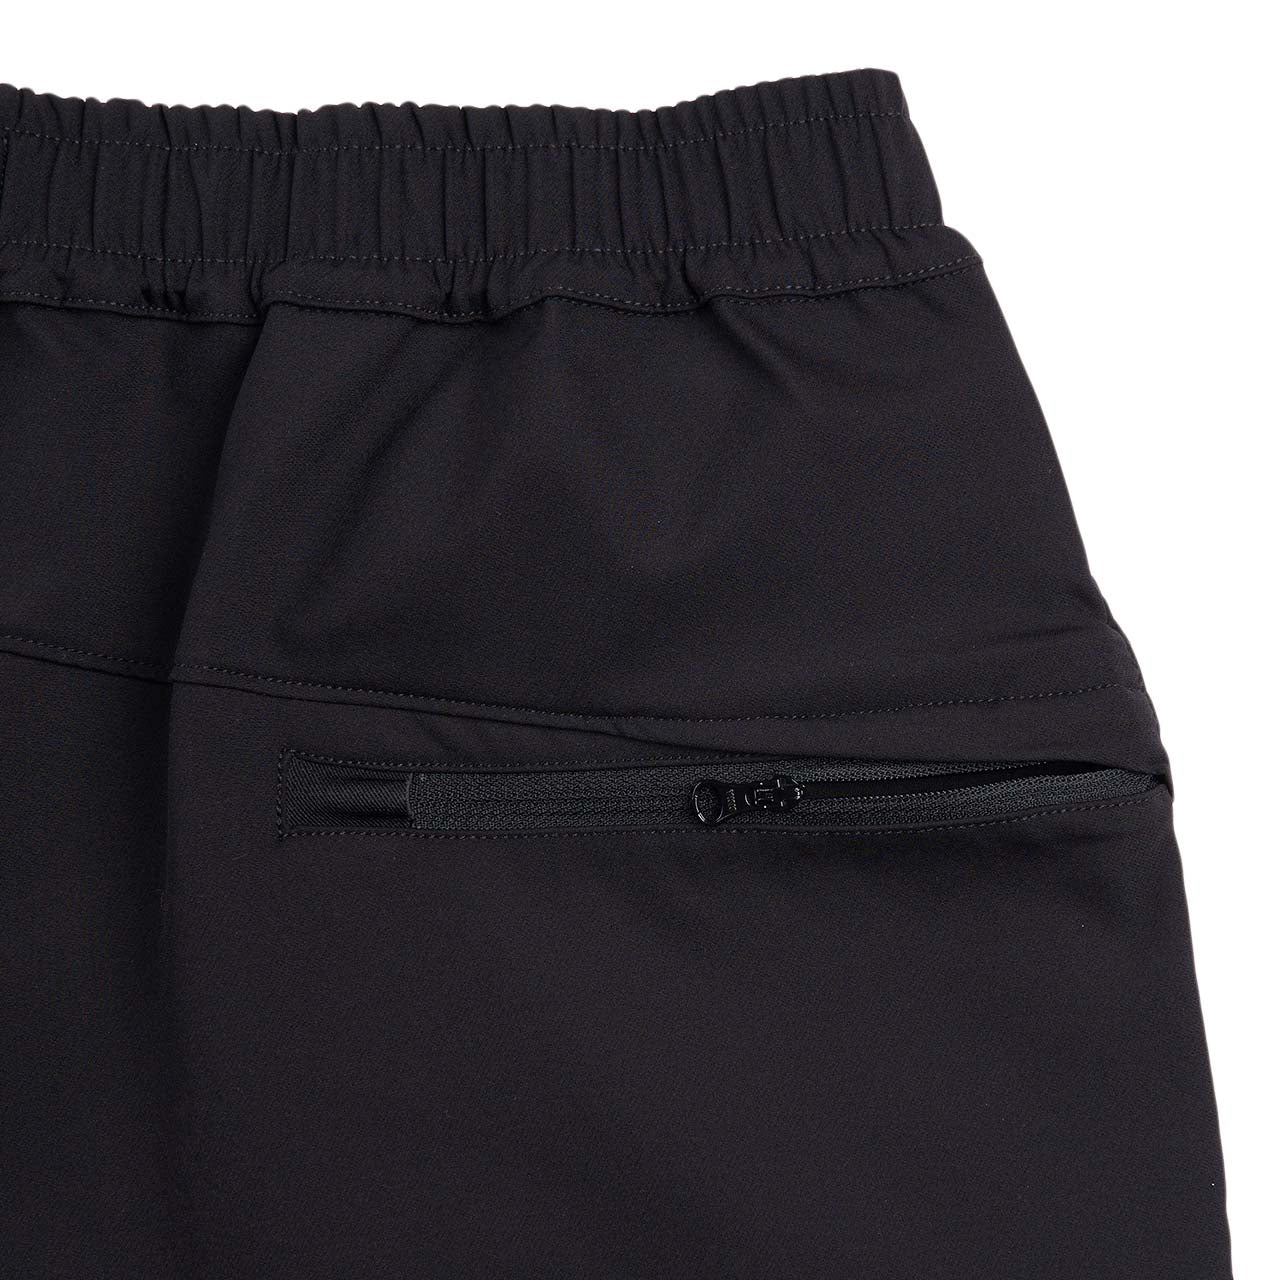 stone island bermuda shorts (black)